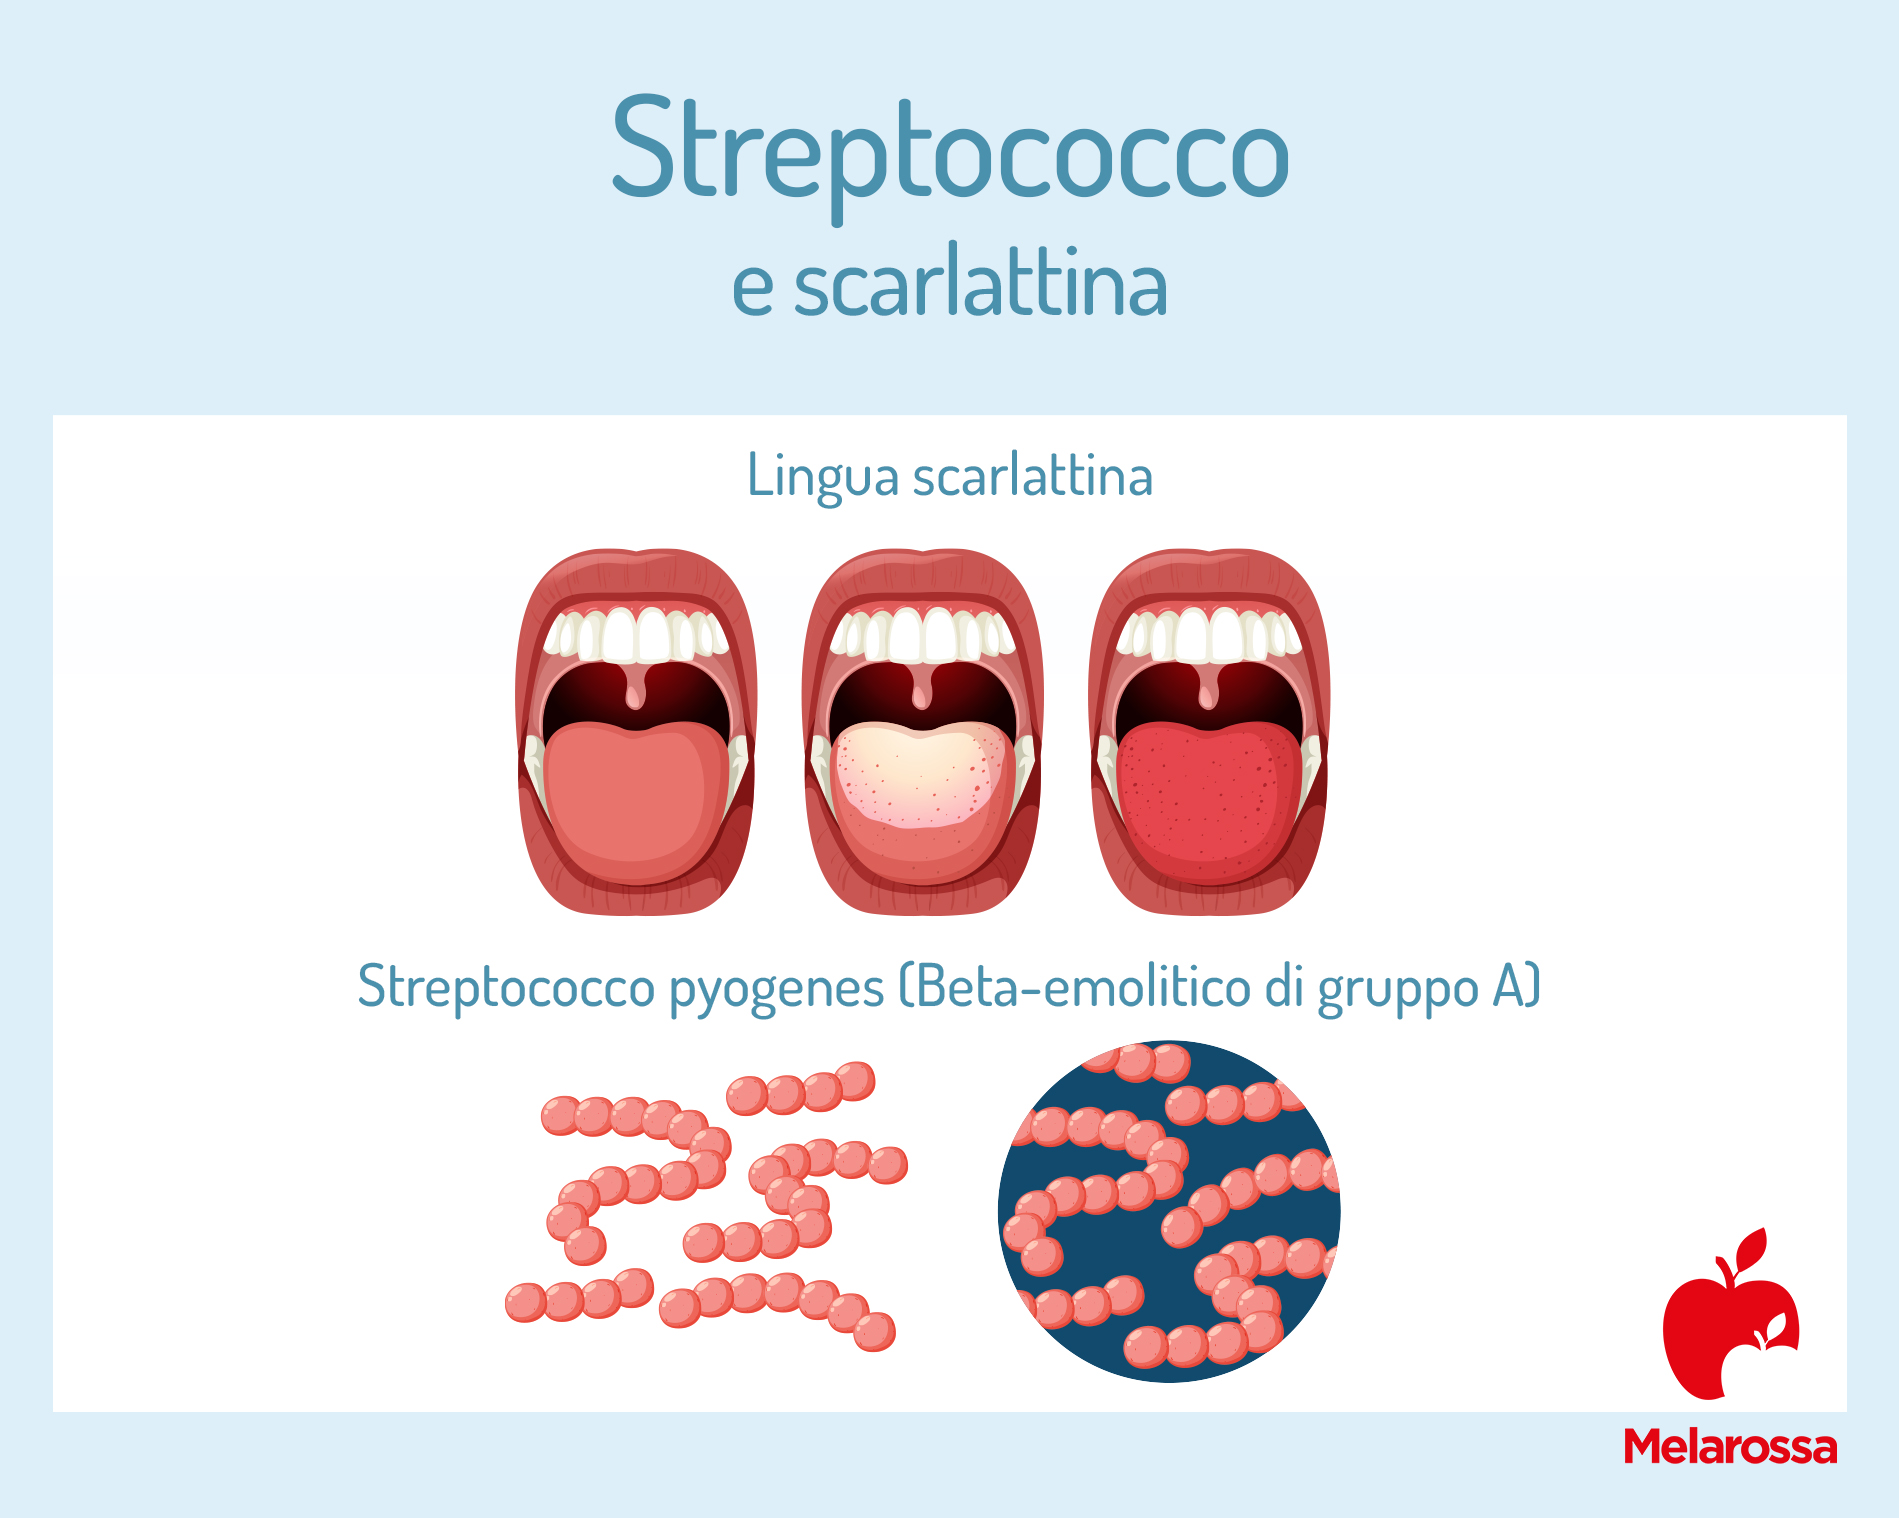 Streptococco e scarlattina